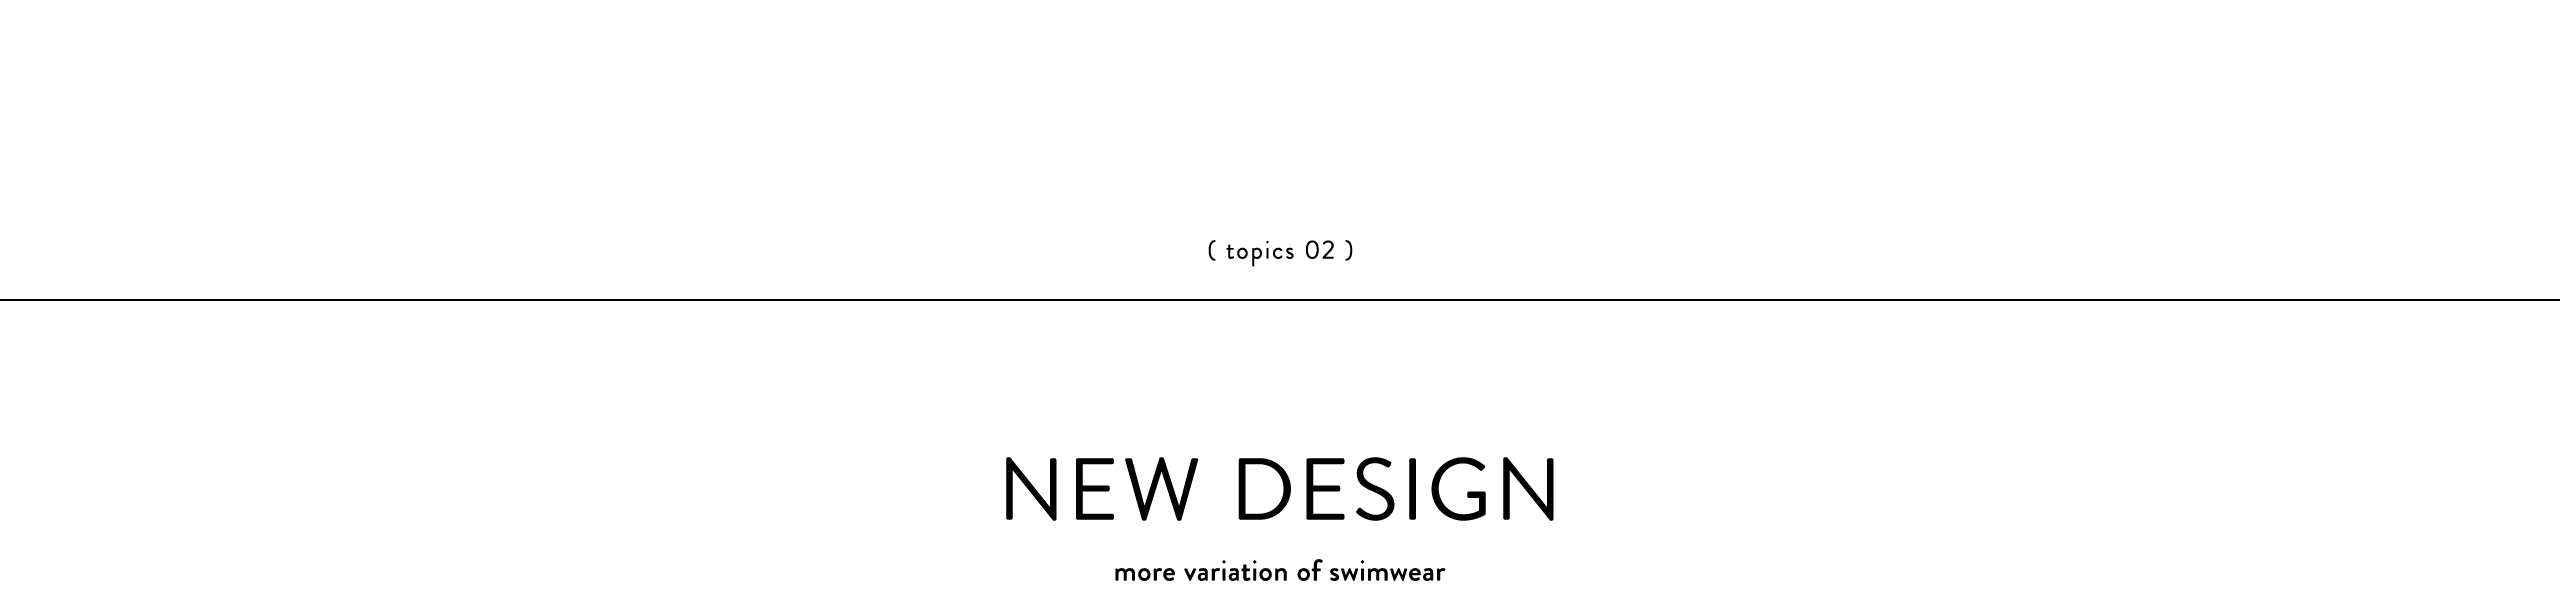 topics 02 NEW DESIGN